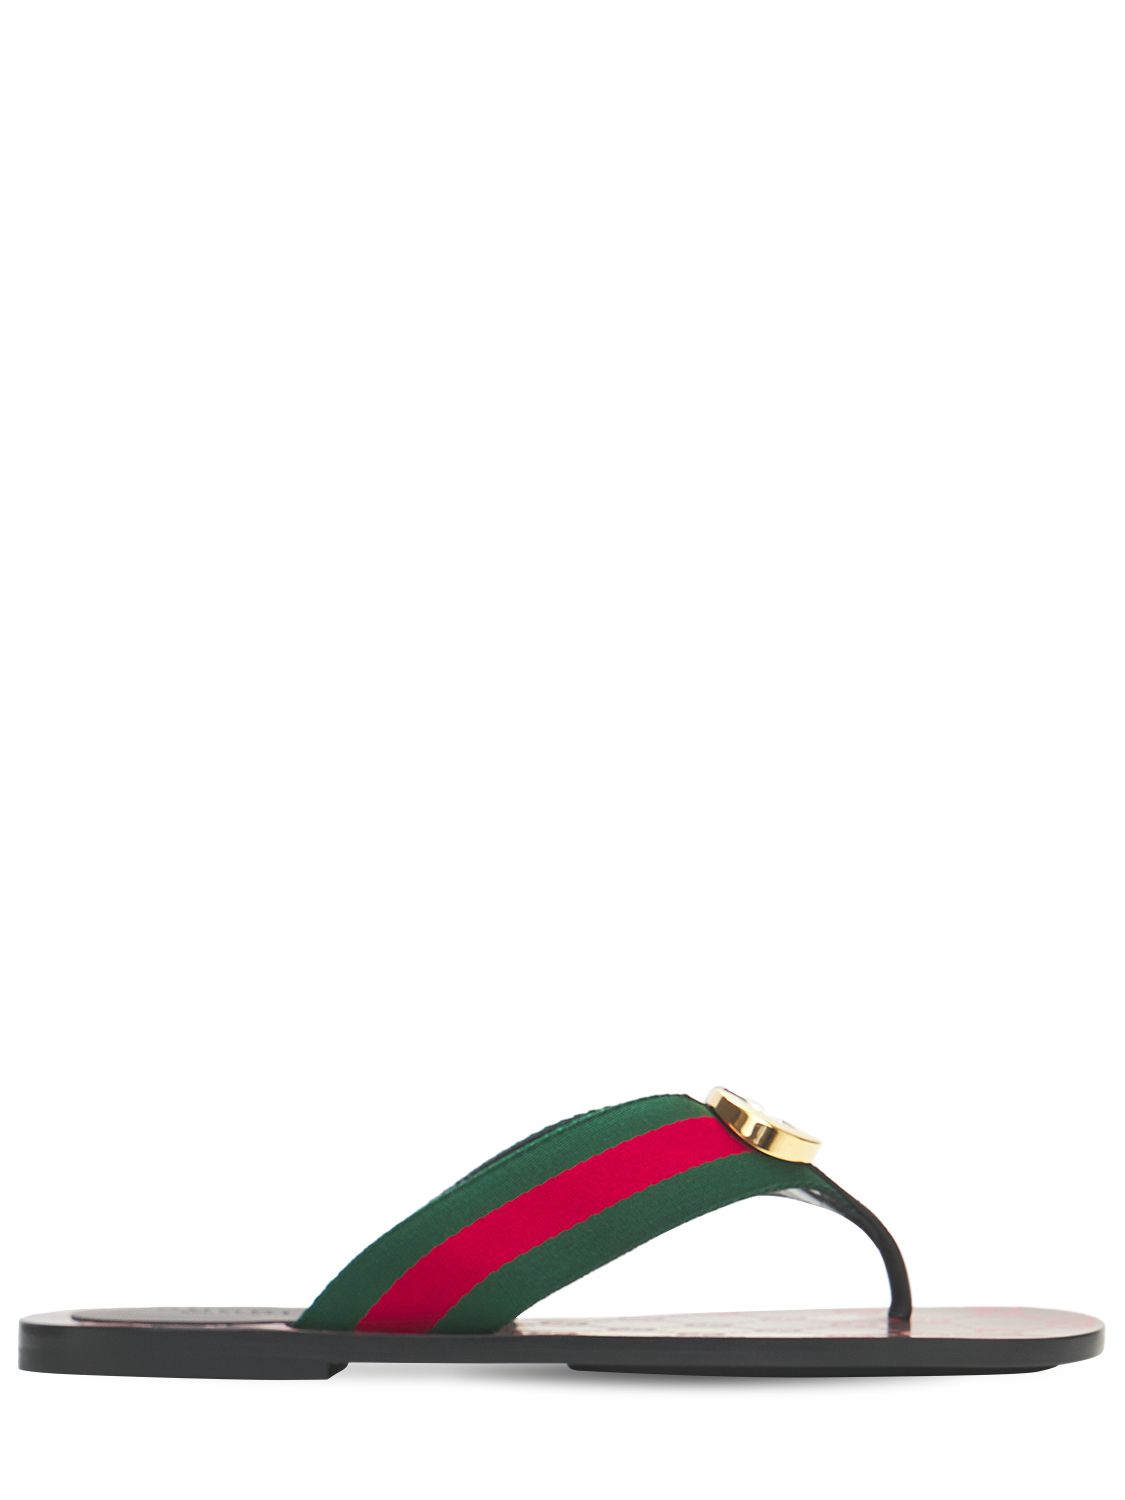 Gucci | Women 10mm Gg Web Thong Sandals Red/green 37.5